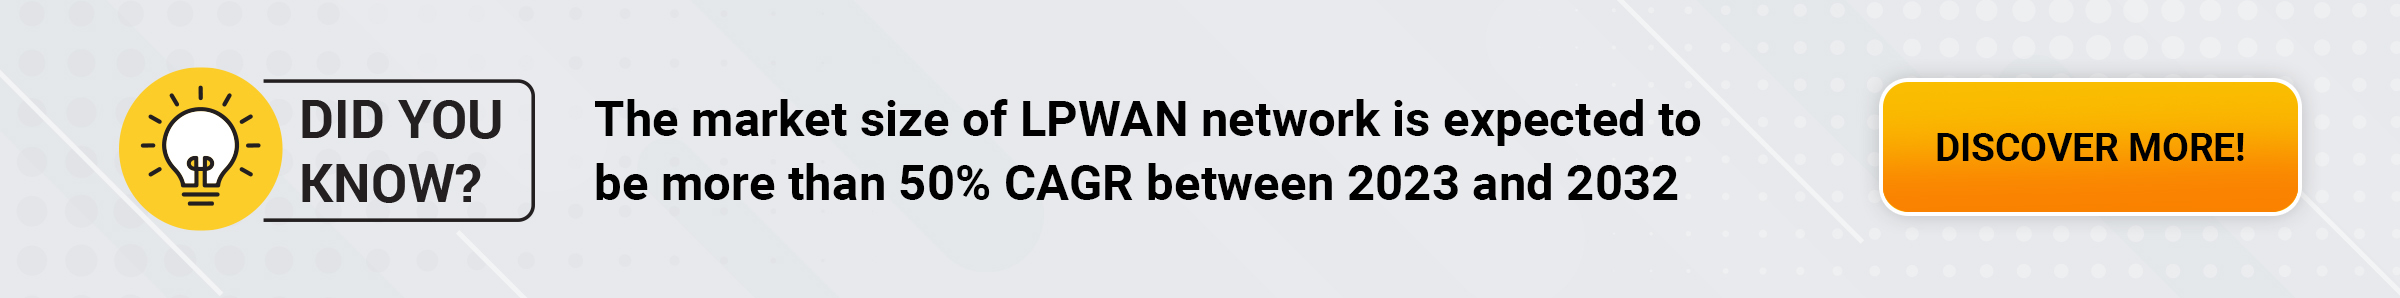 LPWAN for IoT services